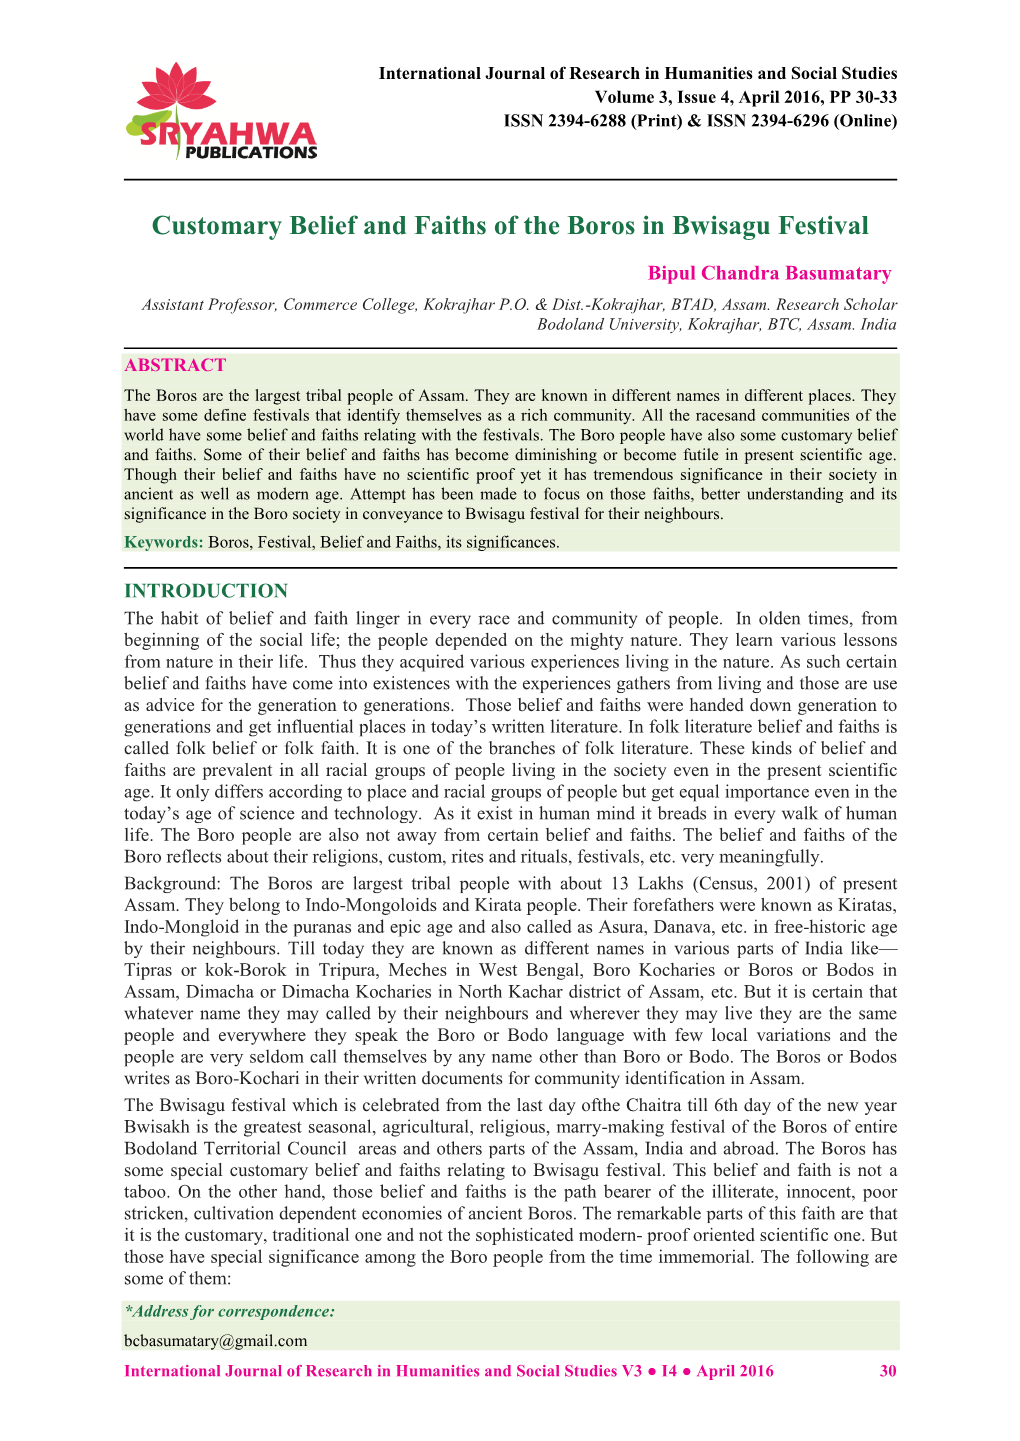 Customary Belief and Faiths of the Boros in Bwisagu Festival